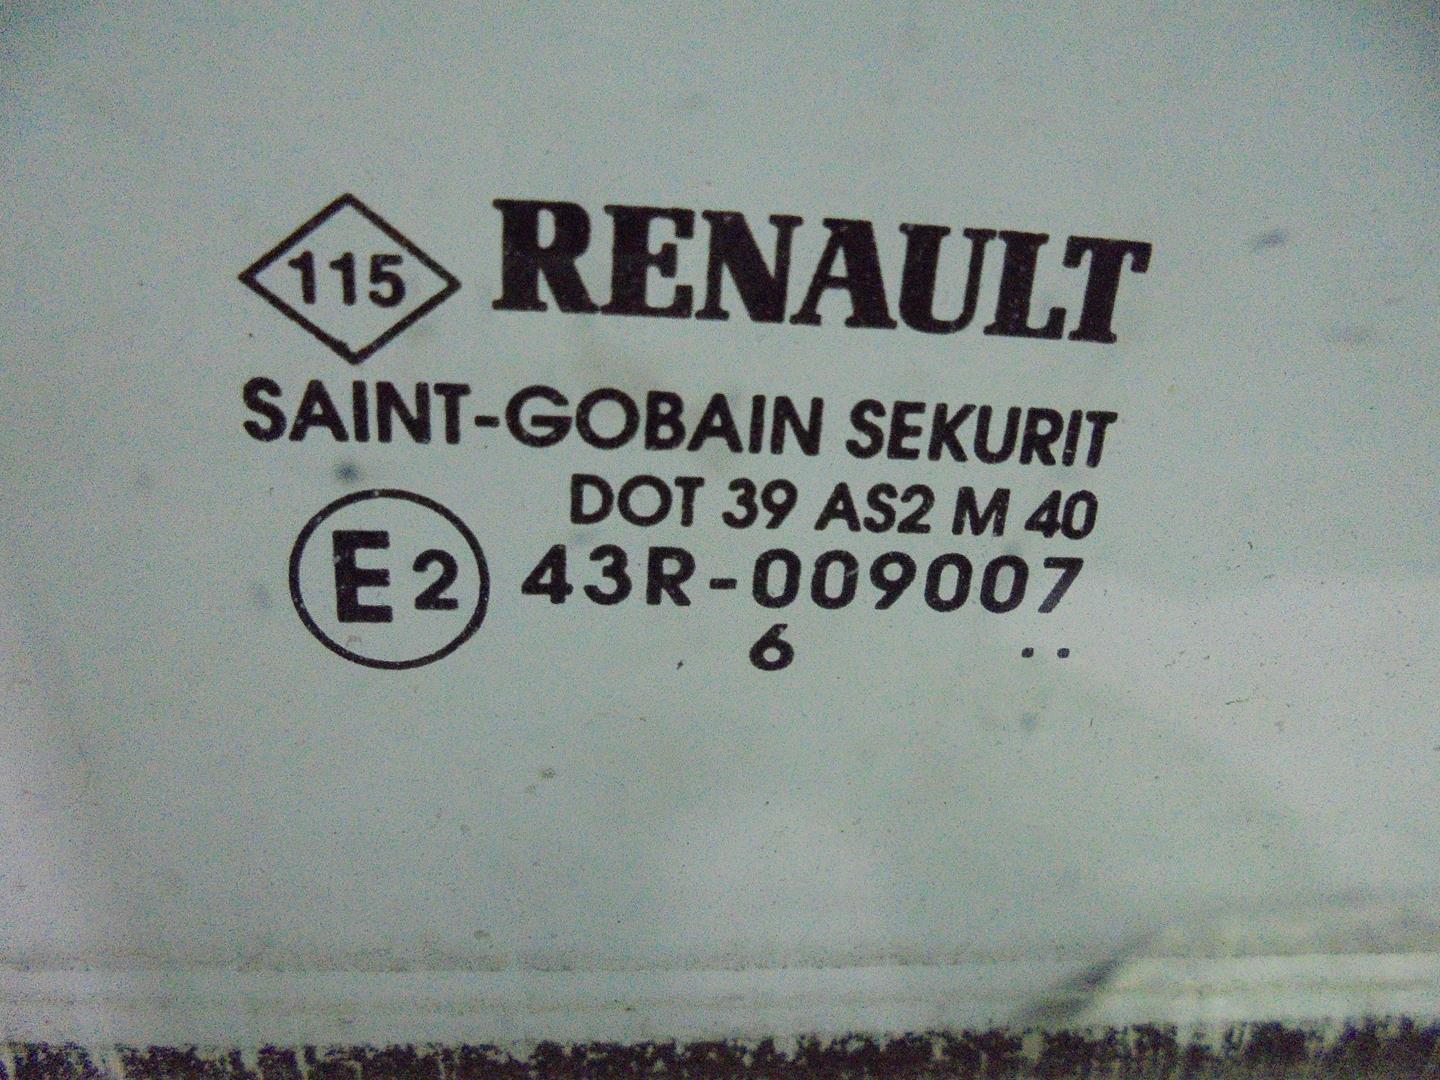 RENAULT Clio 3 generation (2005-2012) Front Right Door Window 43R-009007, DOT39AS2M40 19768629